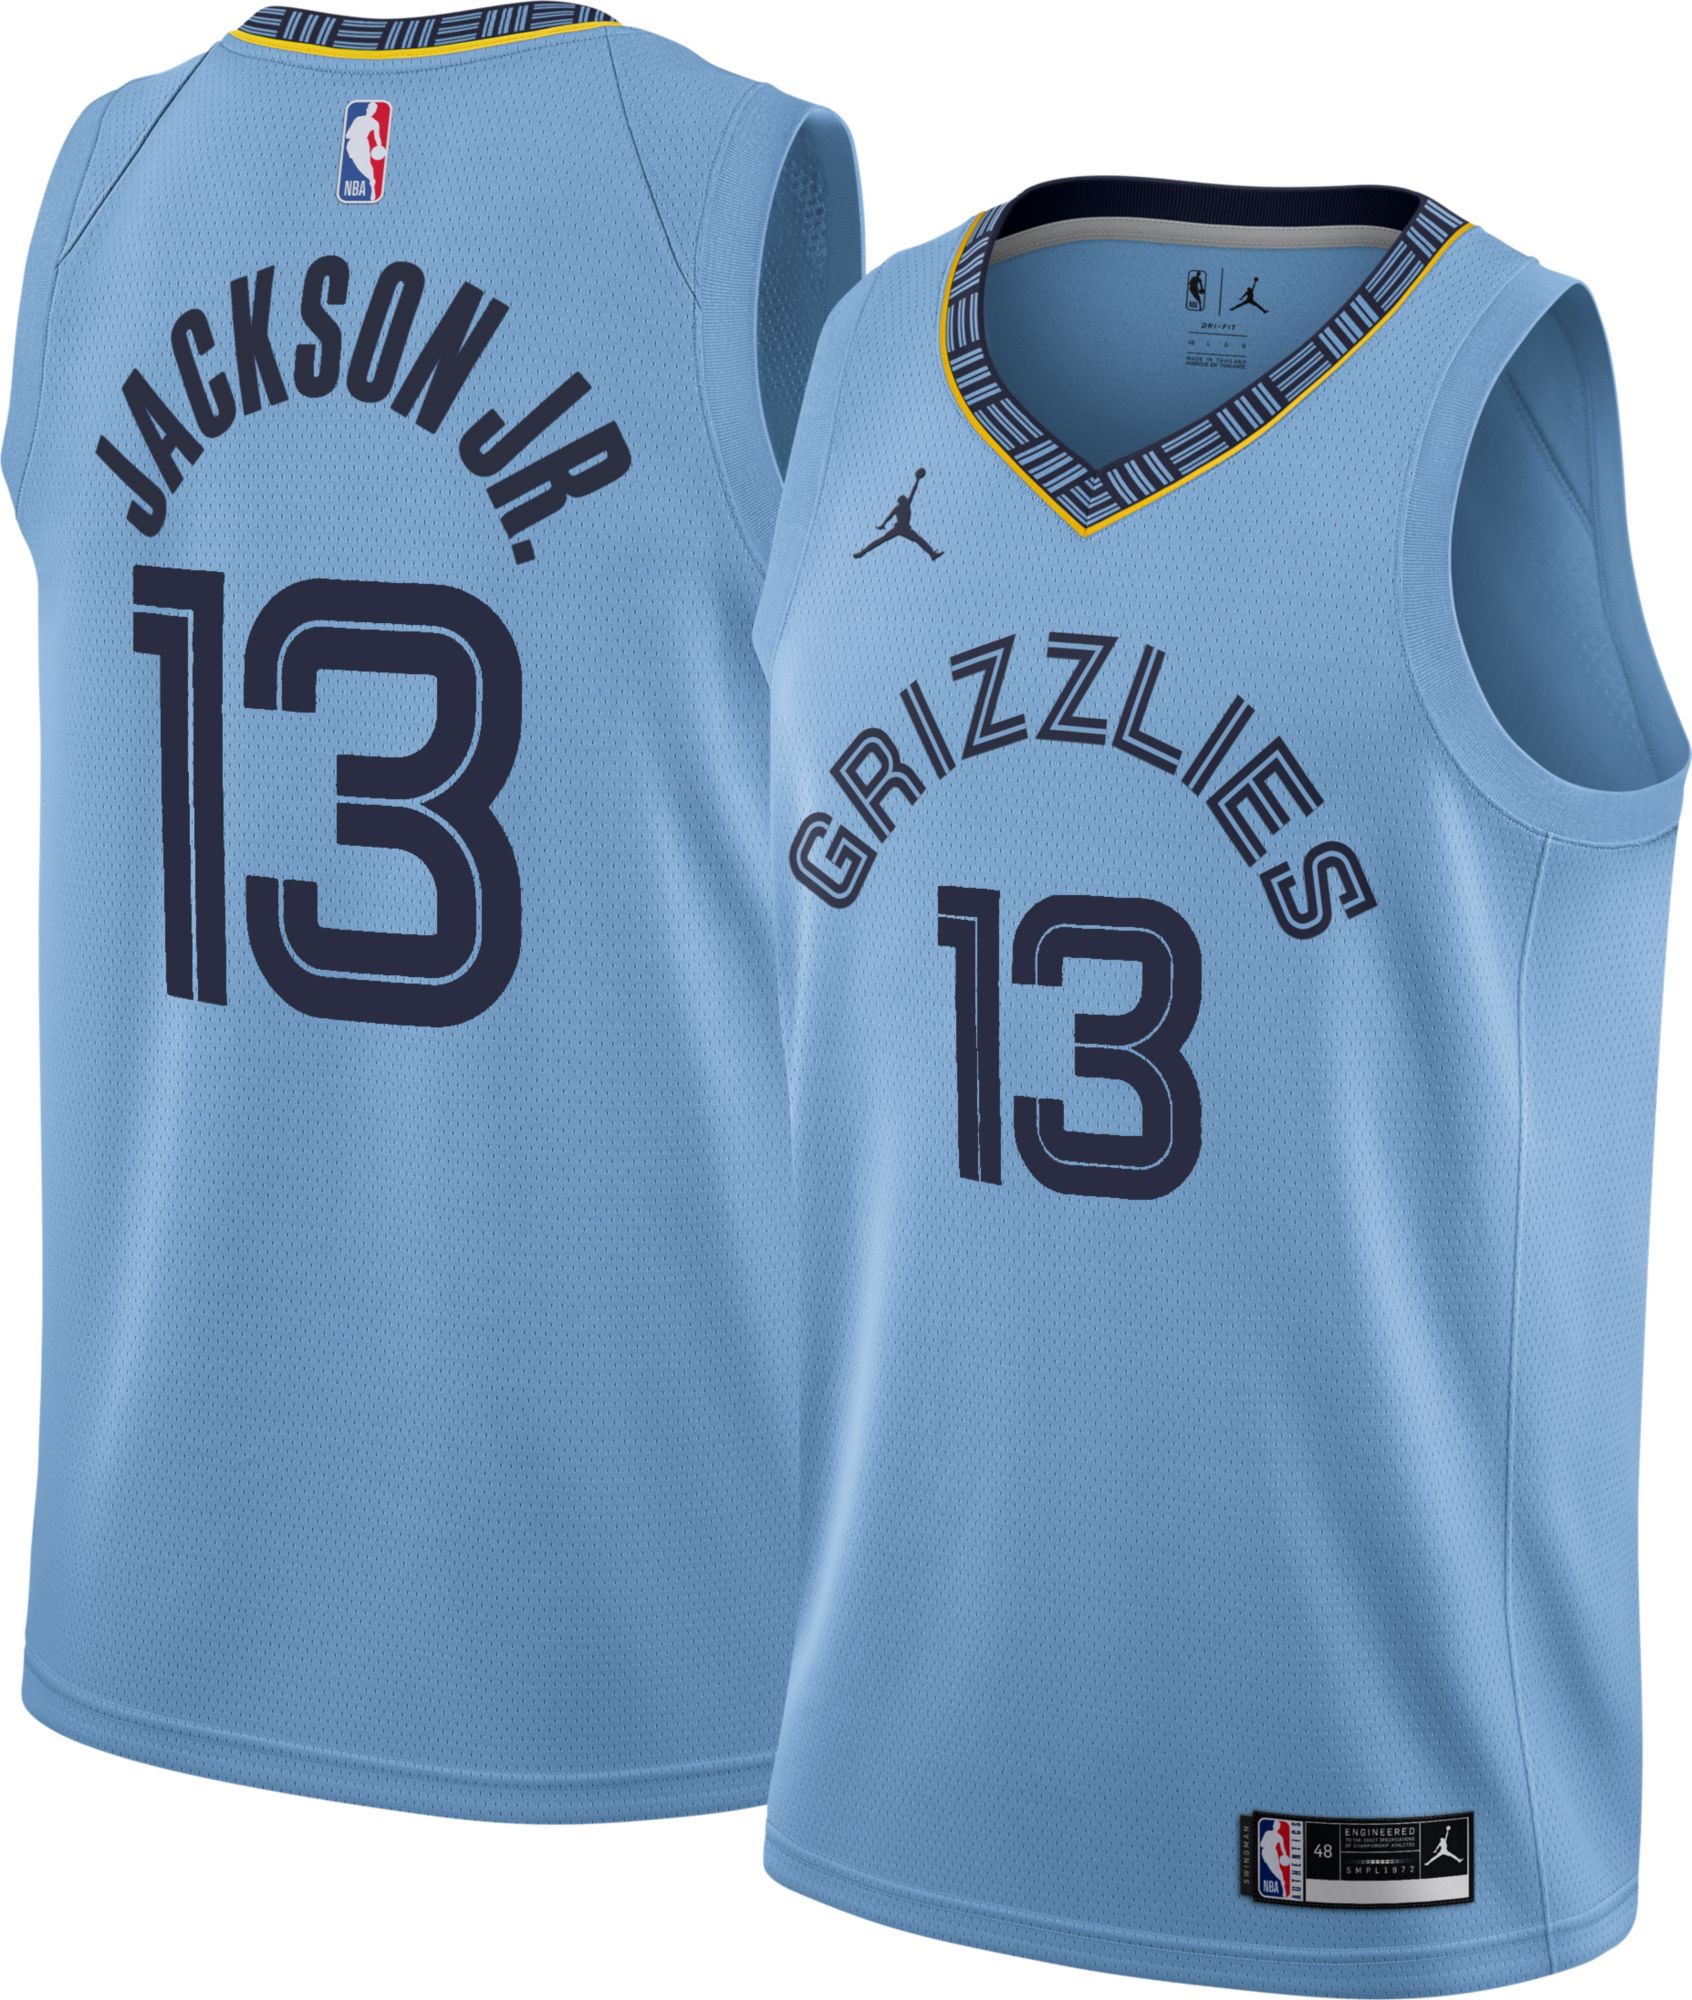 Men's New Era Navy Memphis Grizzlies Throwback T-Shirt Size: Small